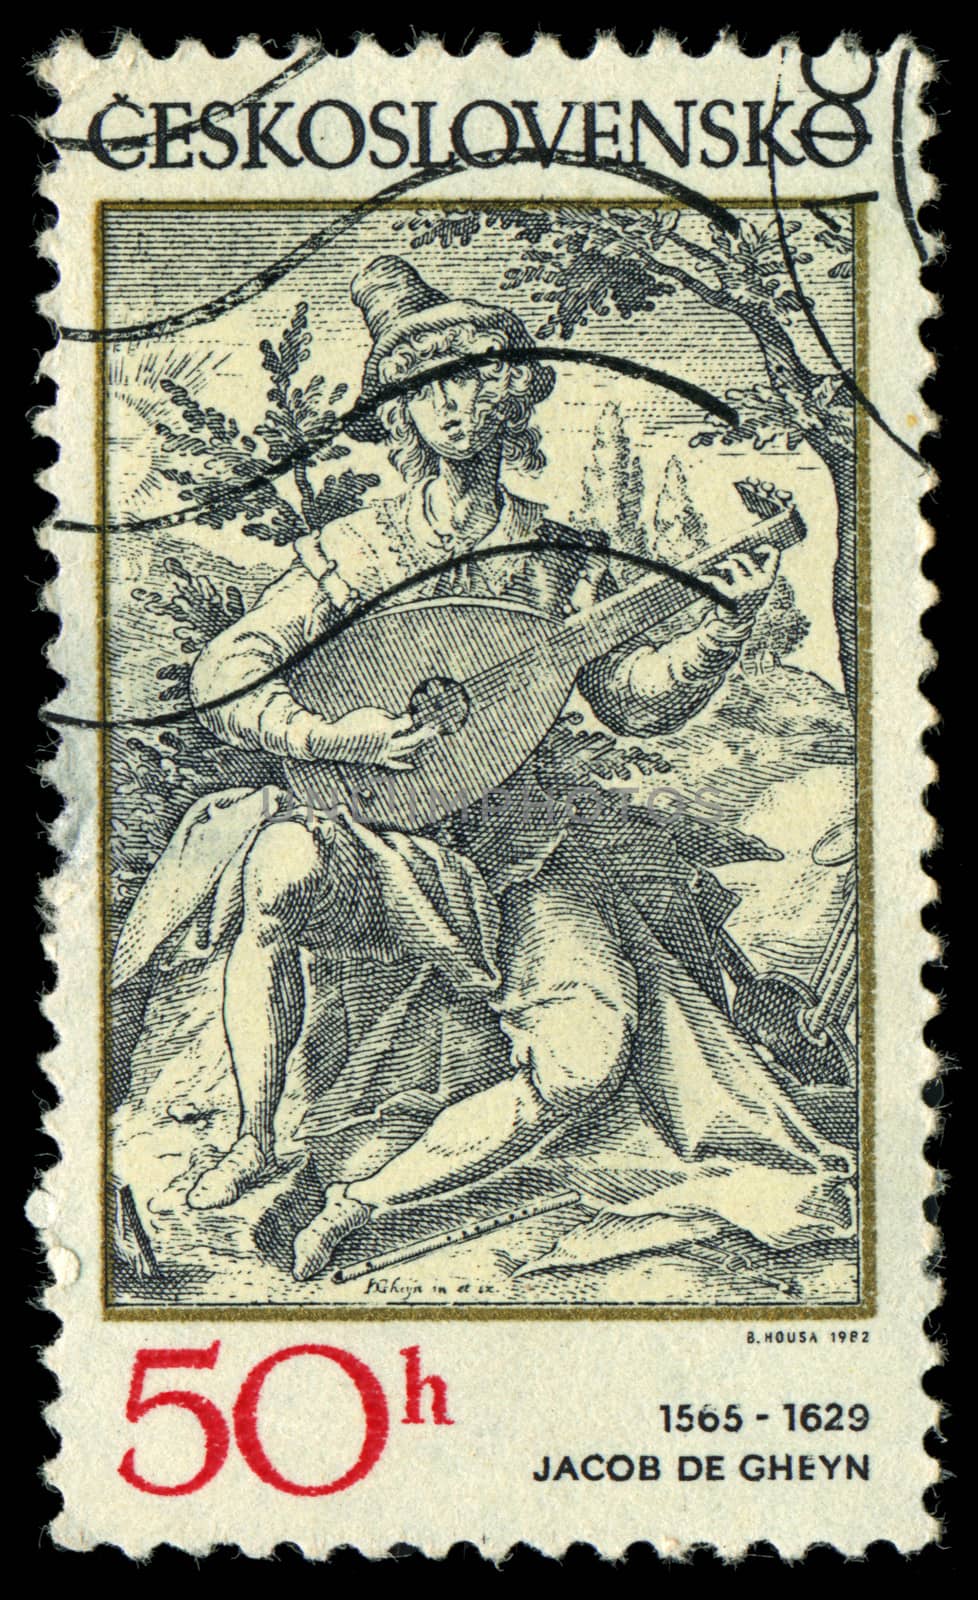 CZECHOSLOVAKIA - CIRCA 1982: A stamp printed in Czechoslovakia, shows the lute player, by Jacob de Gheyn (1565-1629), series, circa 1982